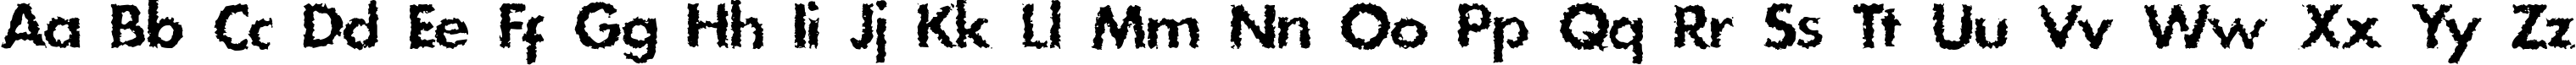 Пример написания английского алфавита шрифтом DS Stain